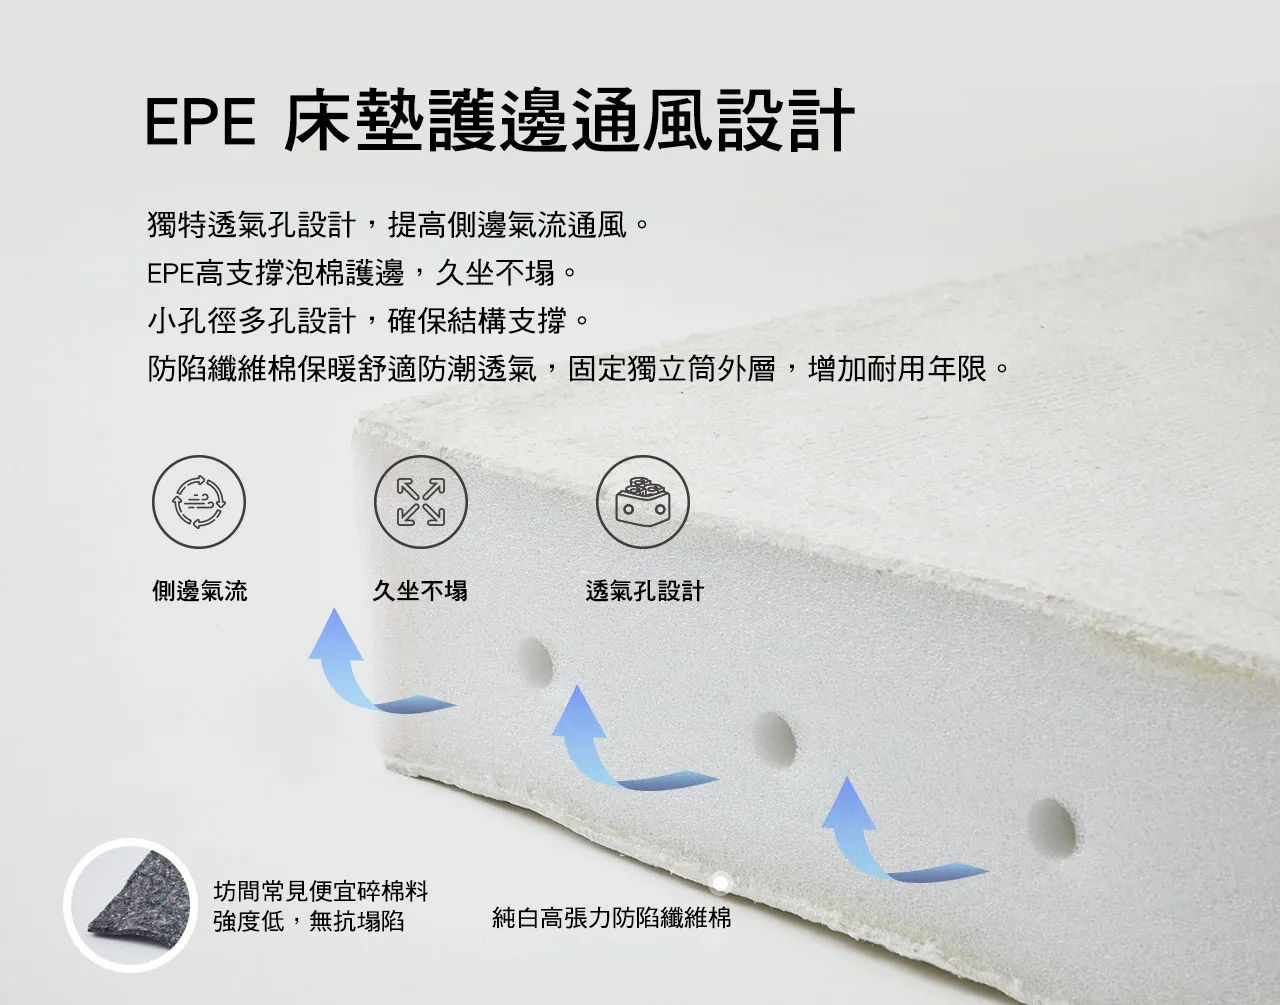 EPE 床墊護邊通風系統，獨特透氣孔設計，提高側邊氣流通風。EPE高支撐泡棉護邊，久坐不塌。小孔徑多孔設計，確保結構支撐。